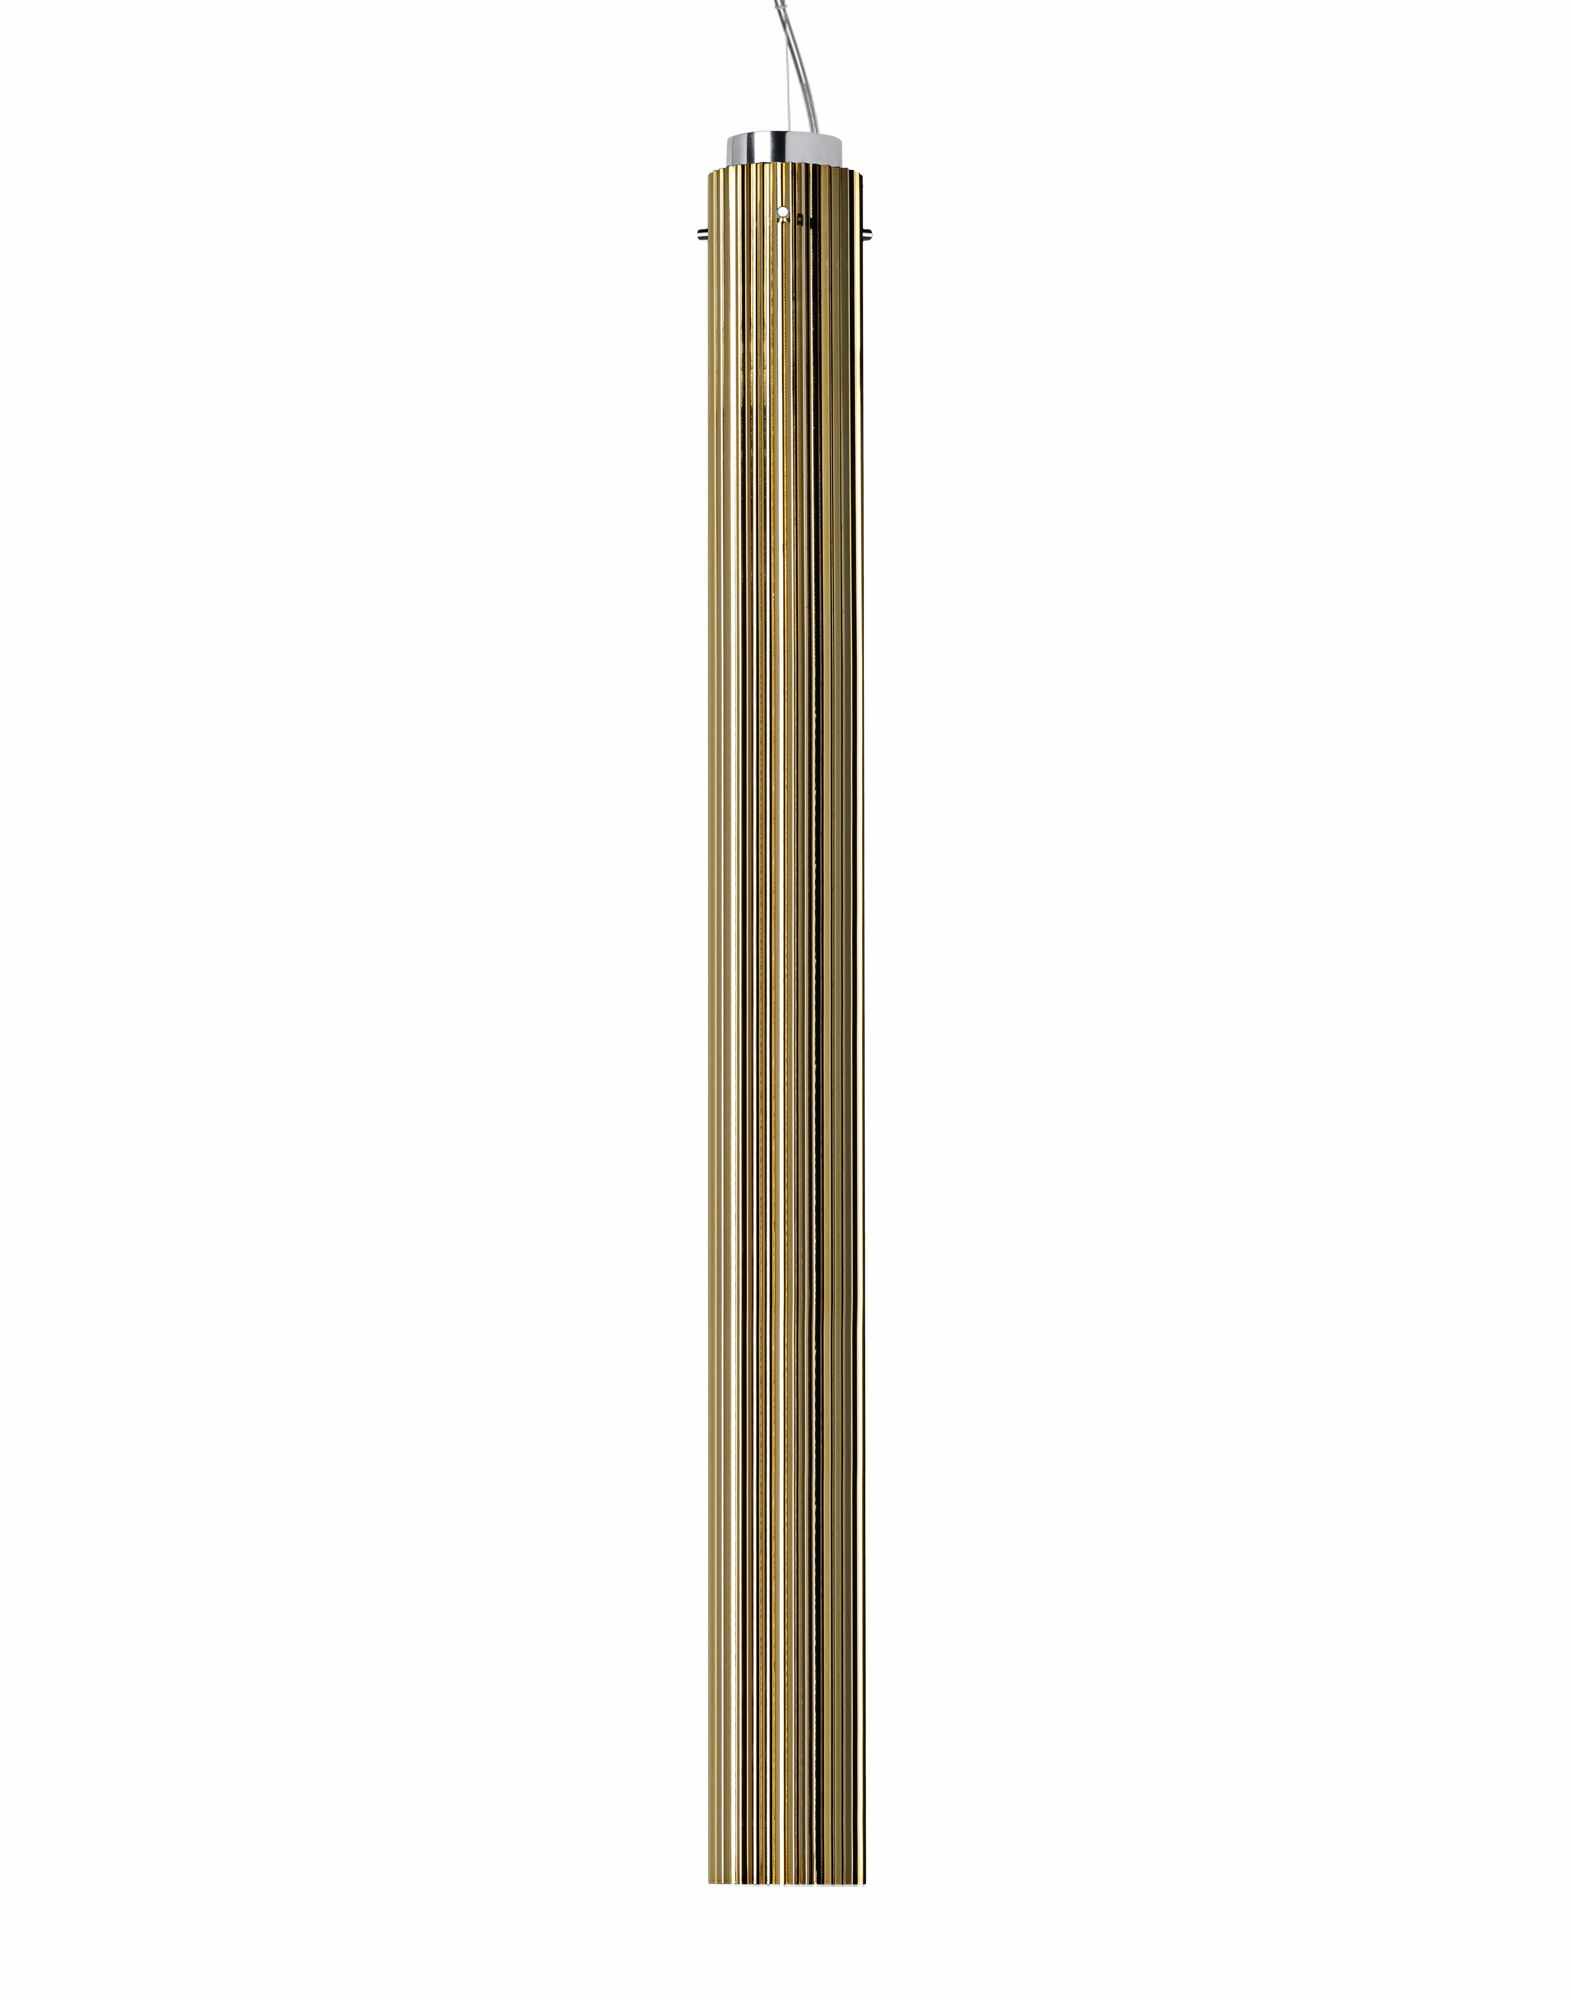 Suspensie Kartell by Laufen Rifly design Ludovica & Roberto Palomba LED 10W h90cm auriu metalizat